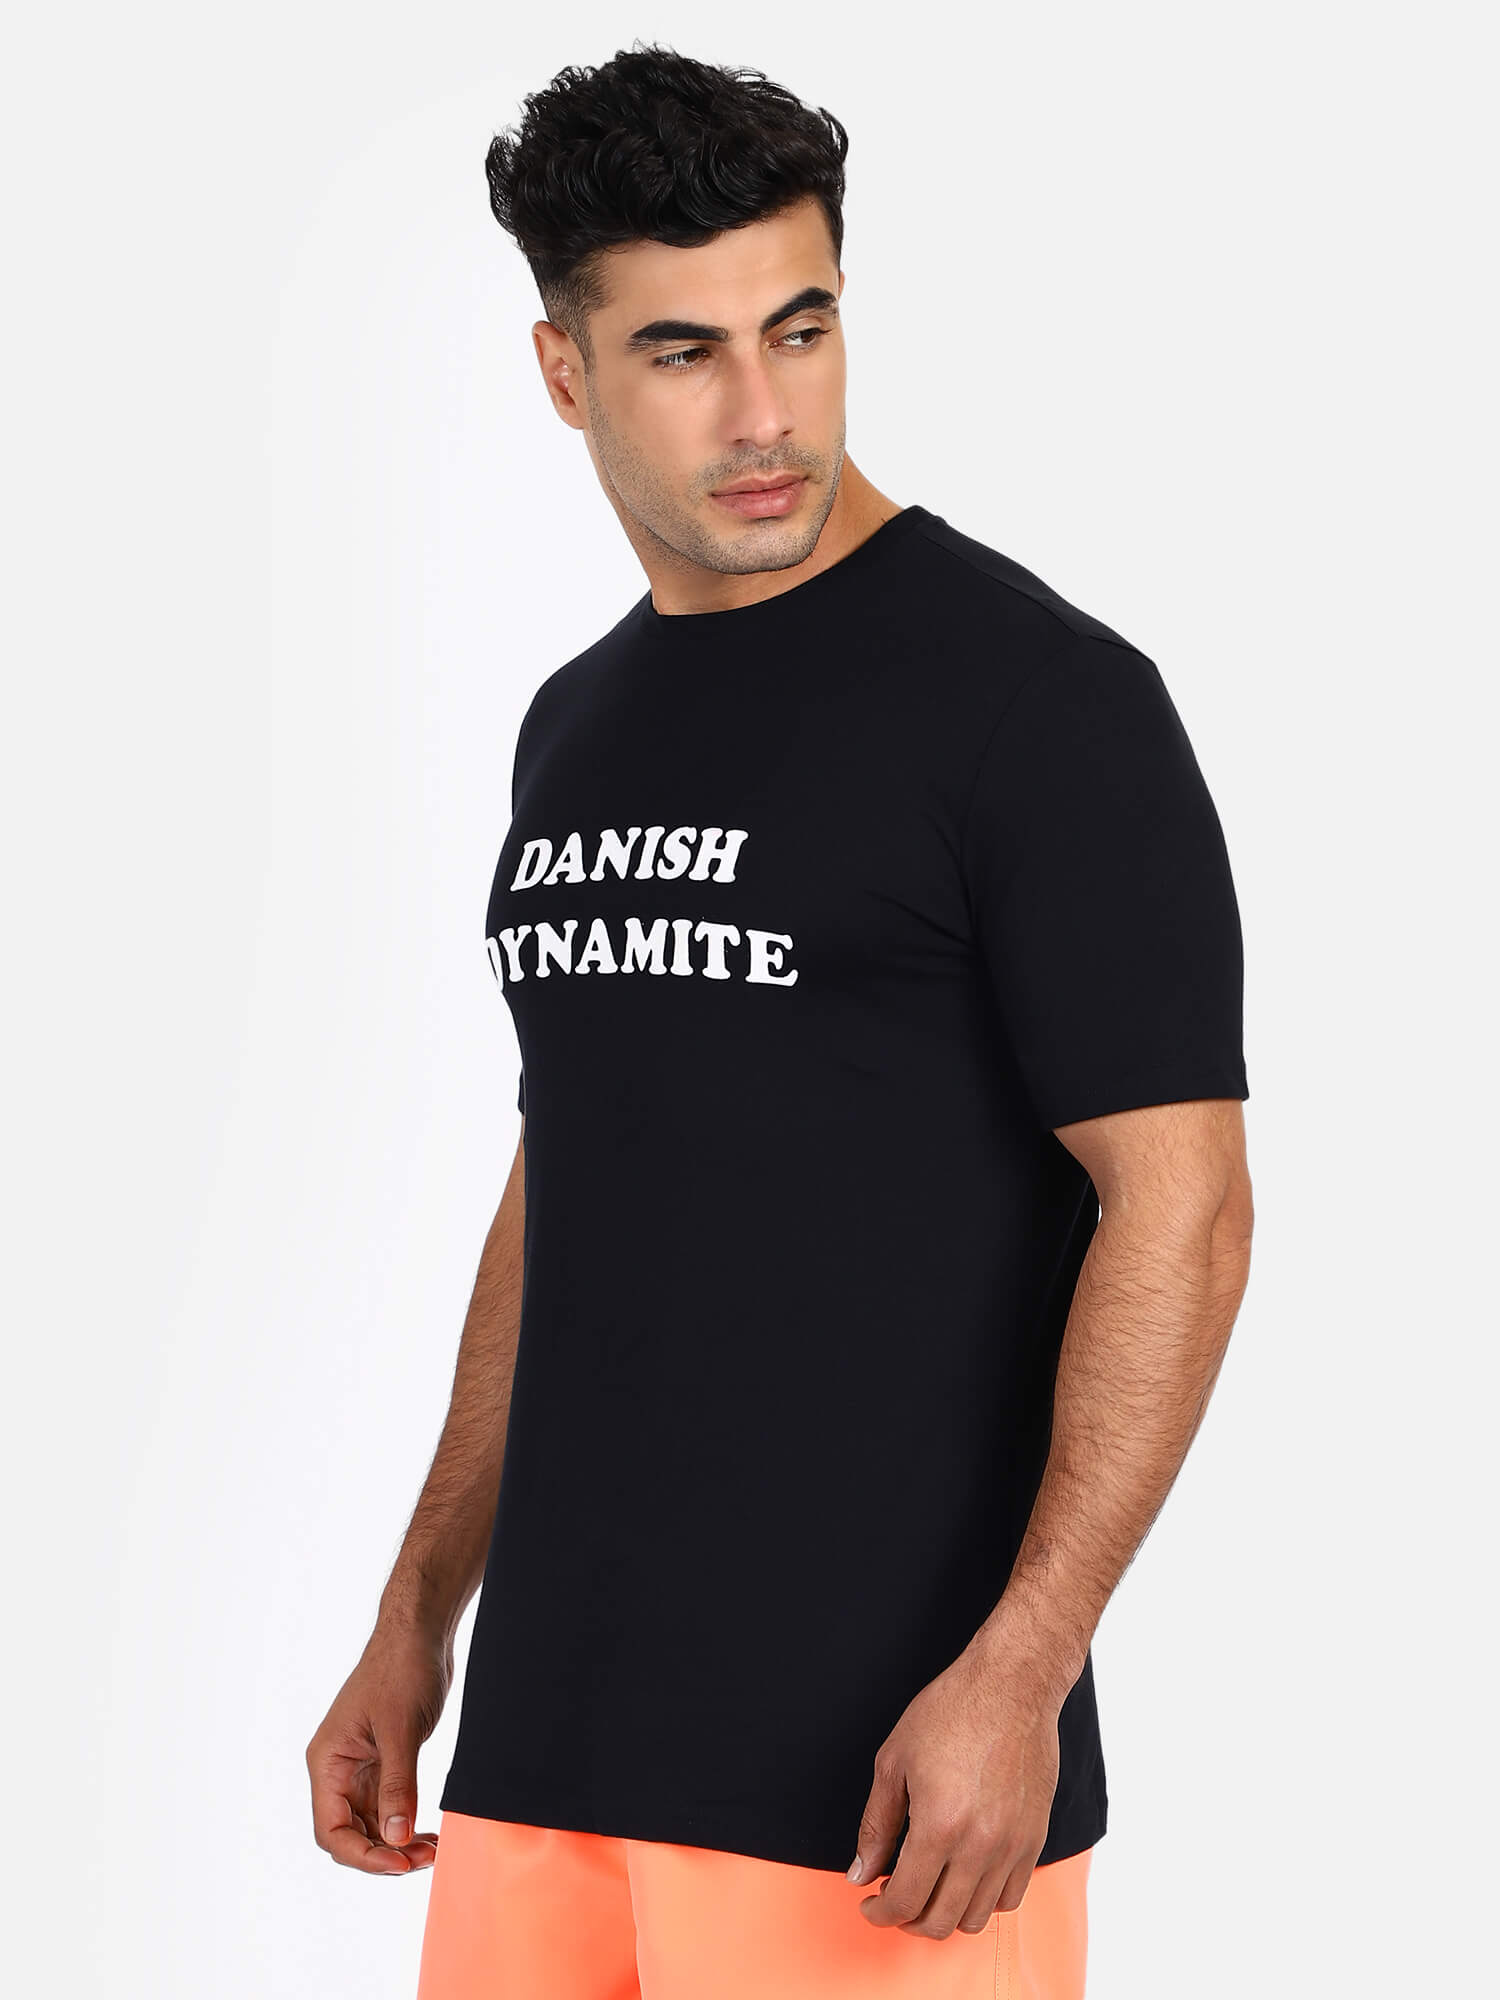 Absalon Black T-Shirts for Men